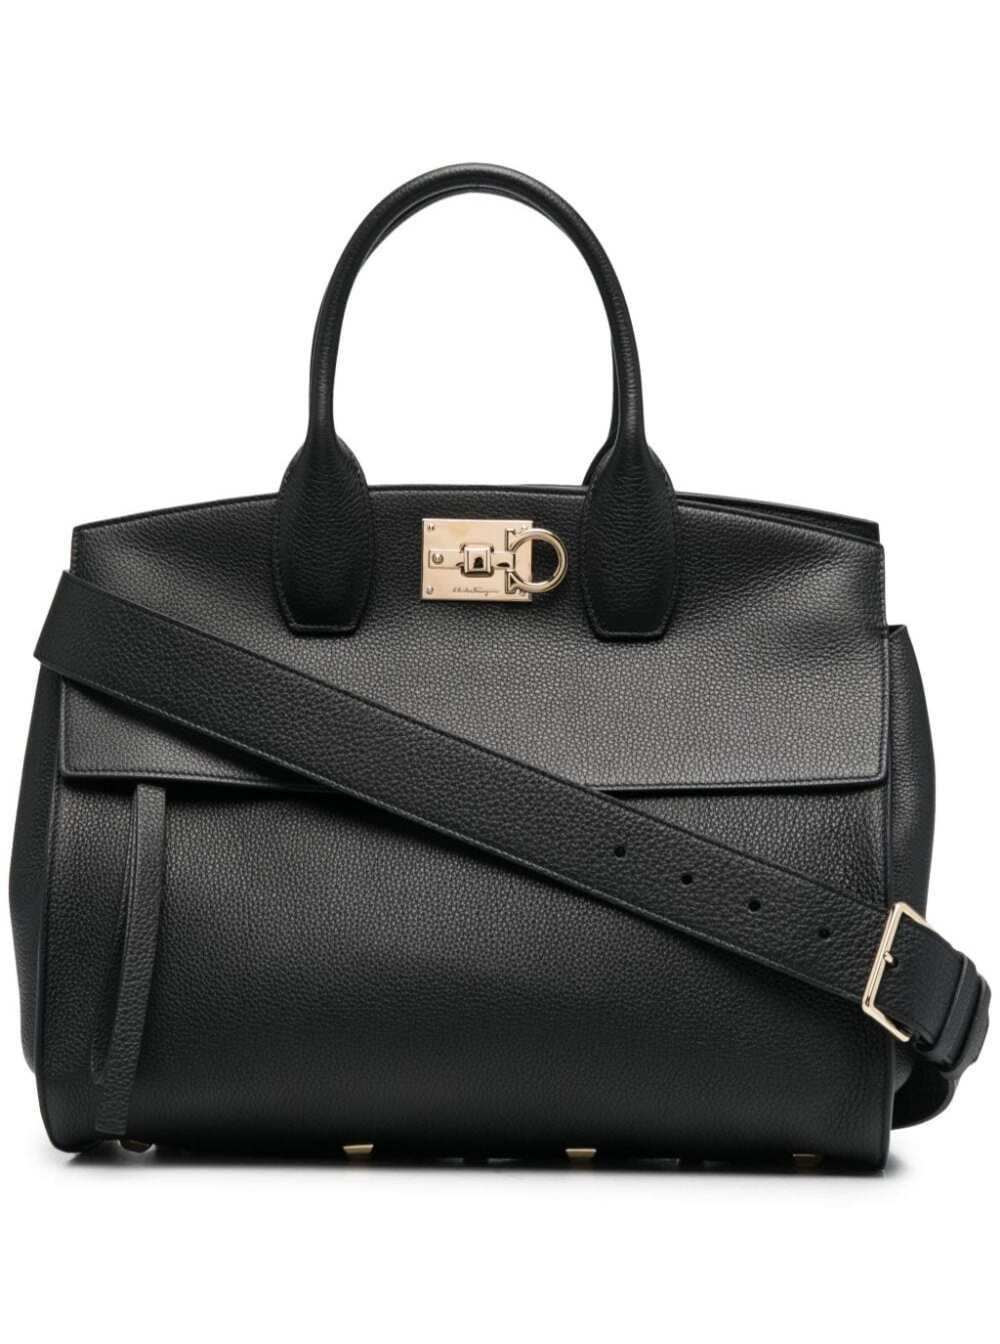 Salvatore Ferragamo Womans The Studio Black Leather Handbag